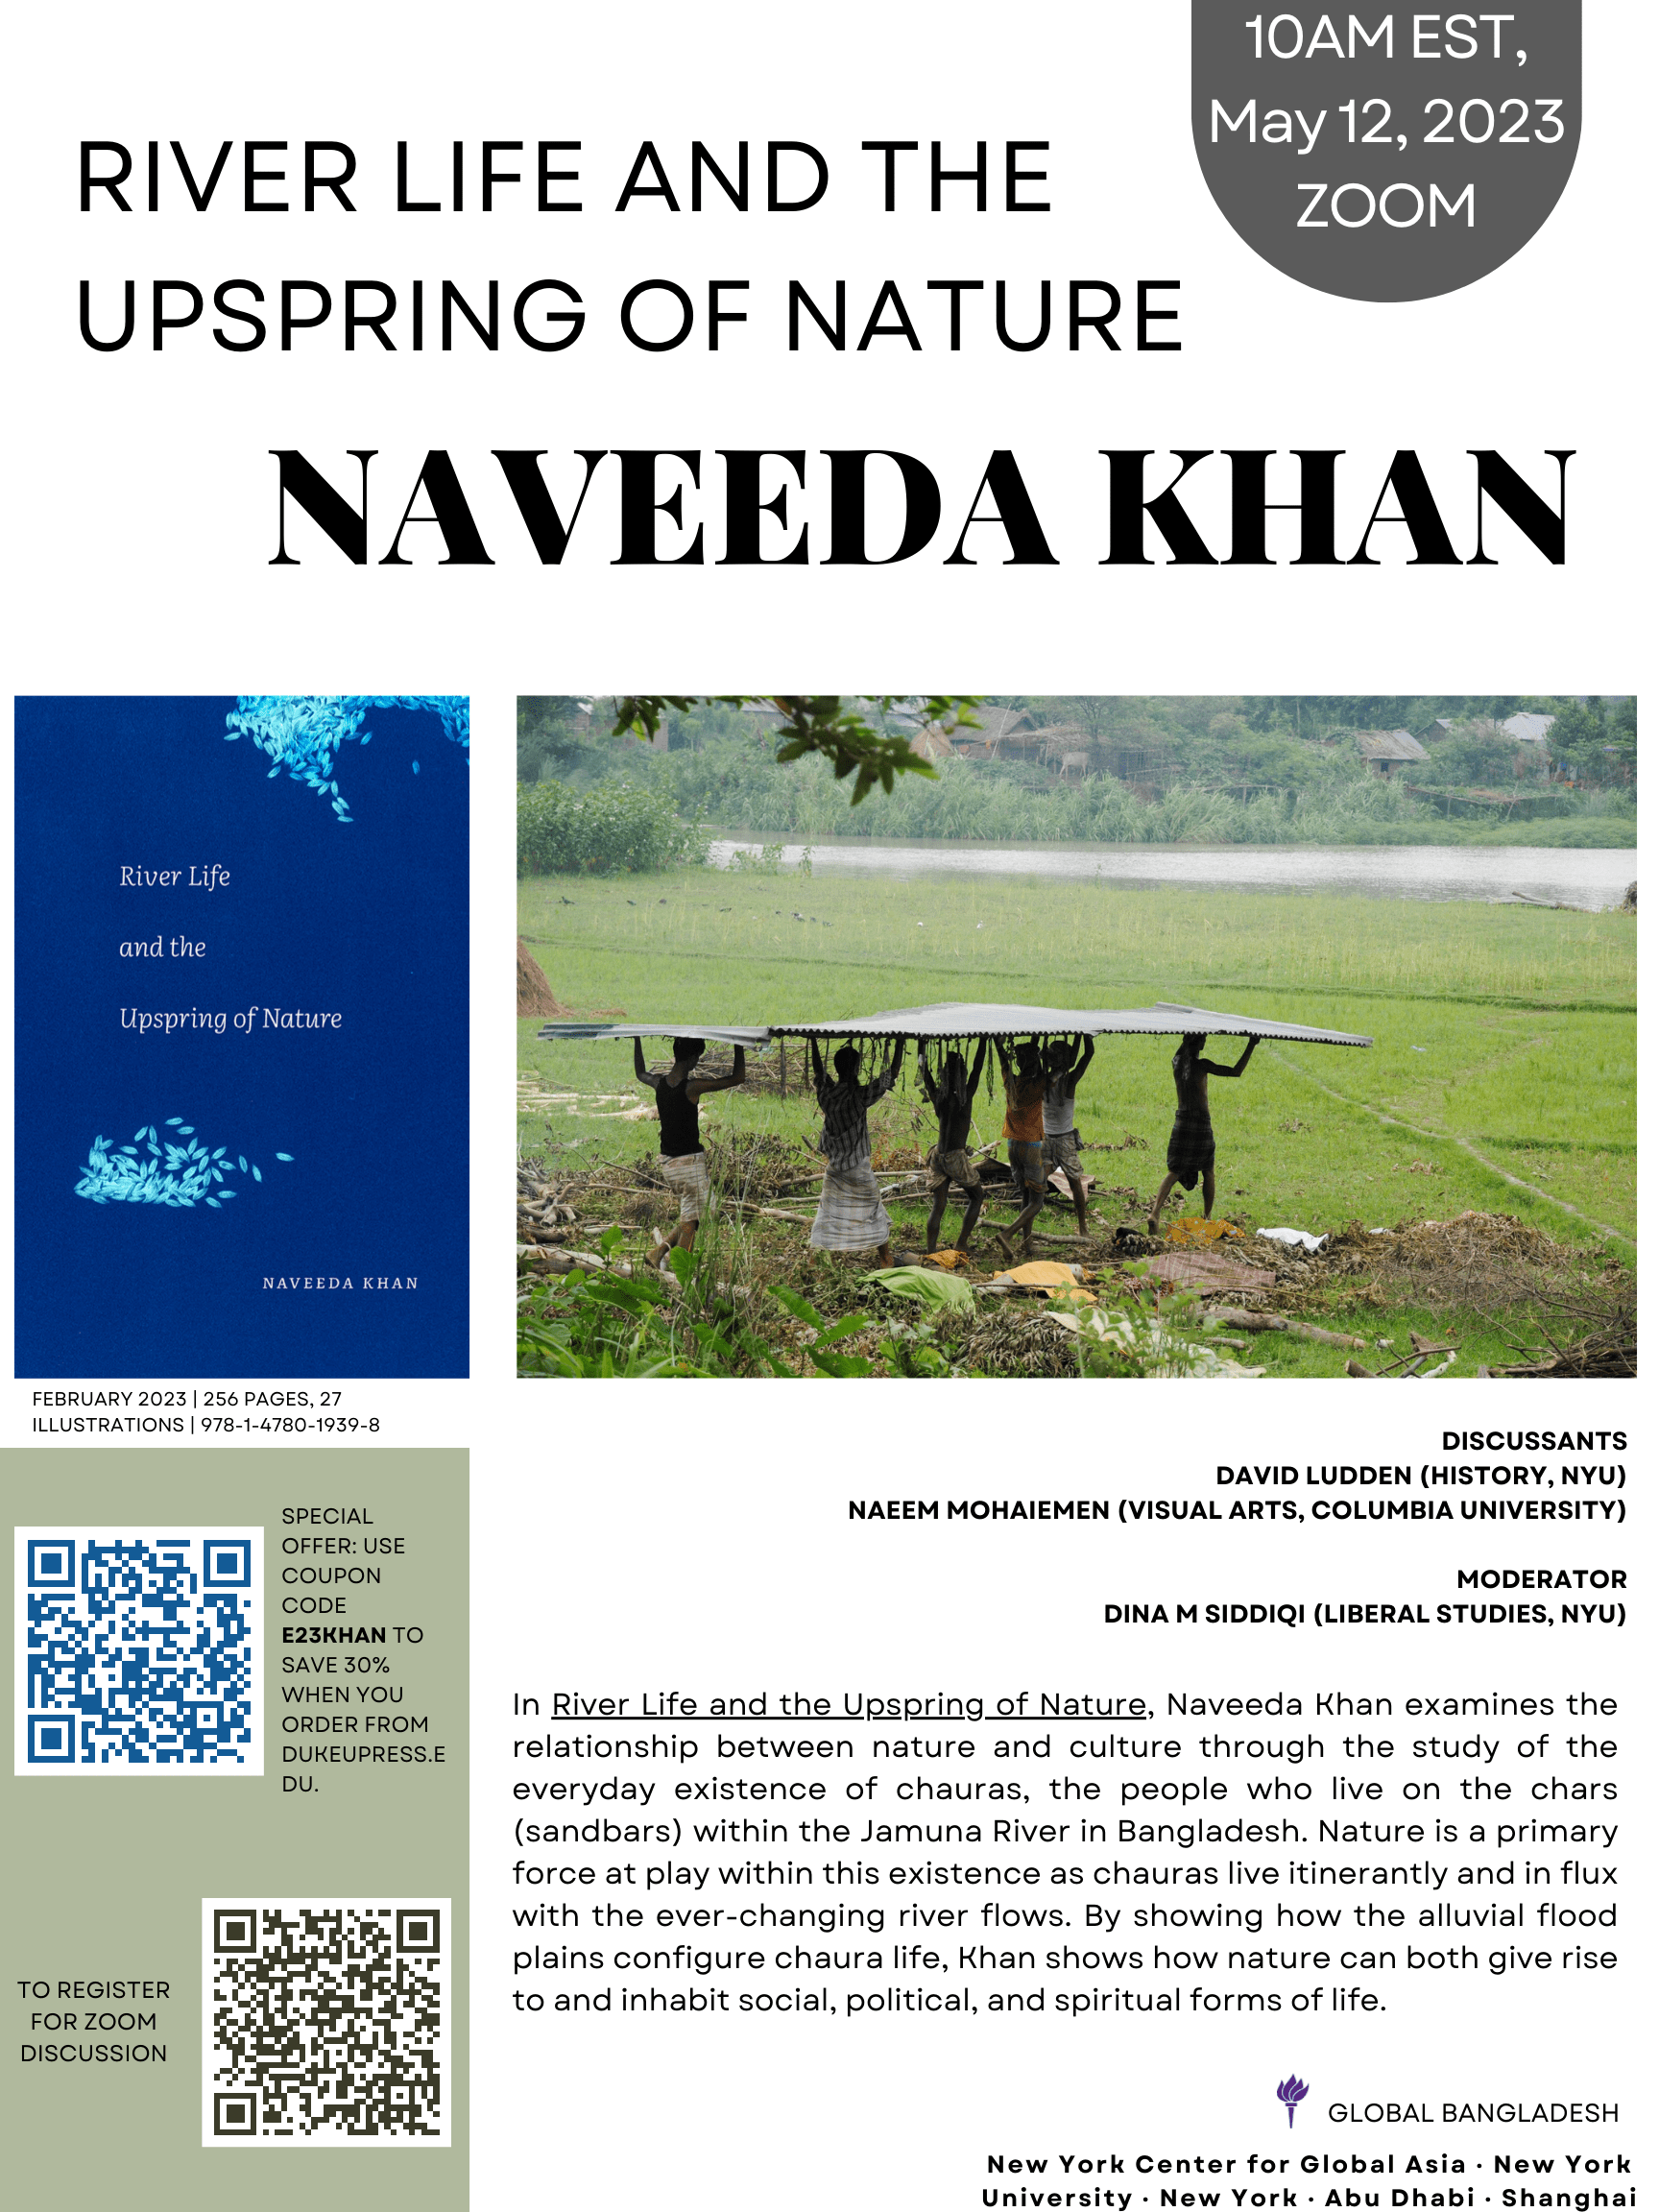 Naveeda Khan presents “River Life and the Upspring of Nature”